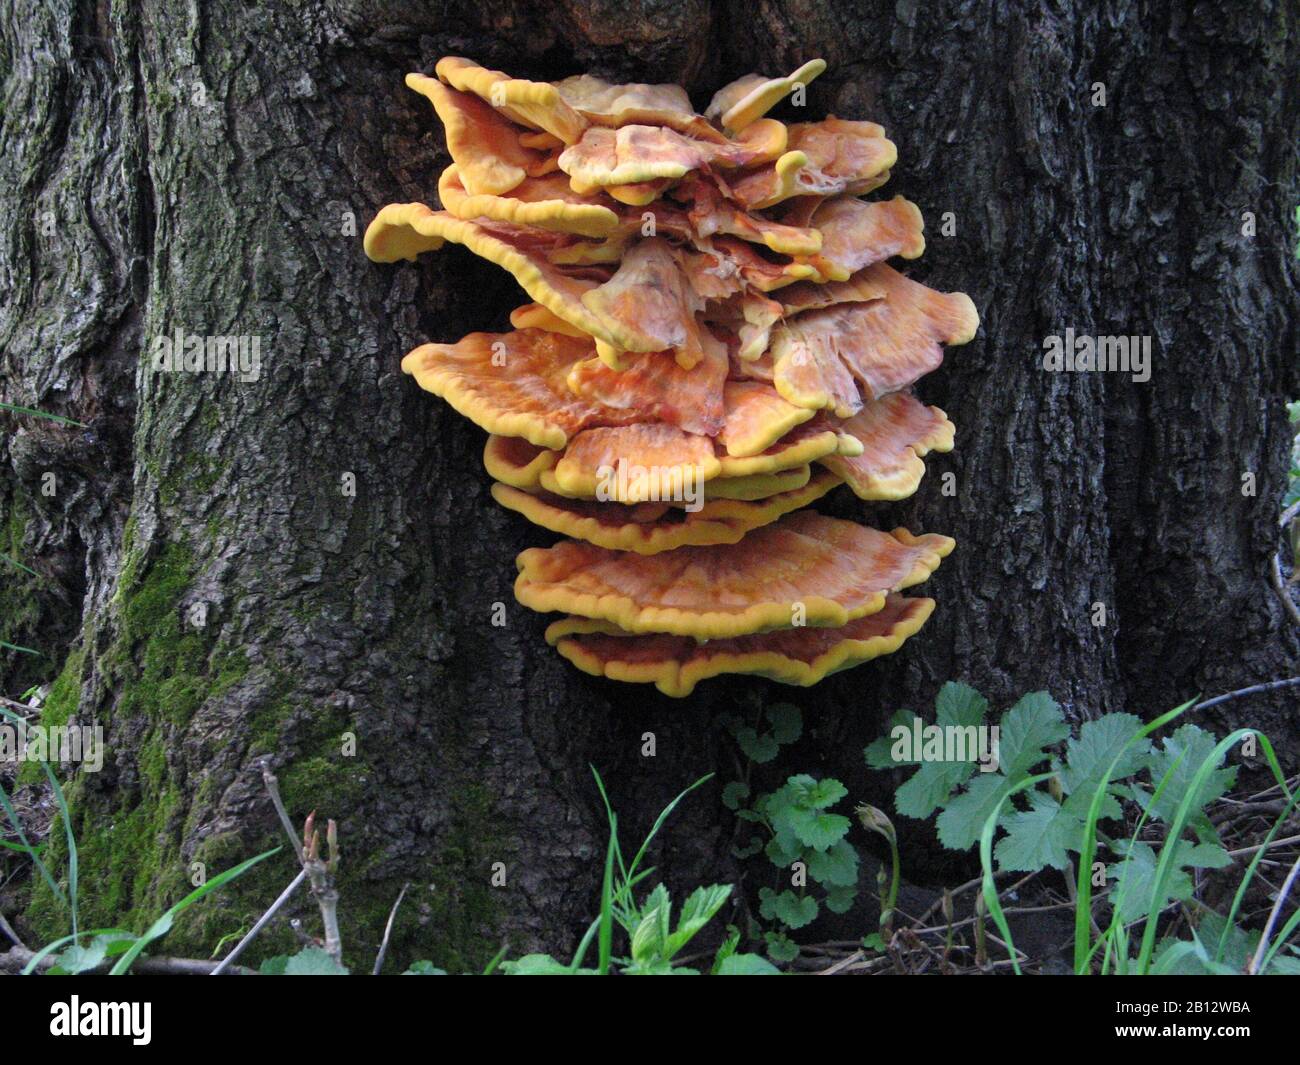 mushrooms on a tree trunk Stock Photo